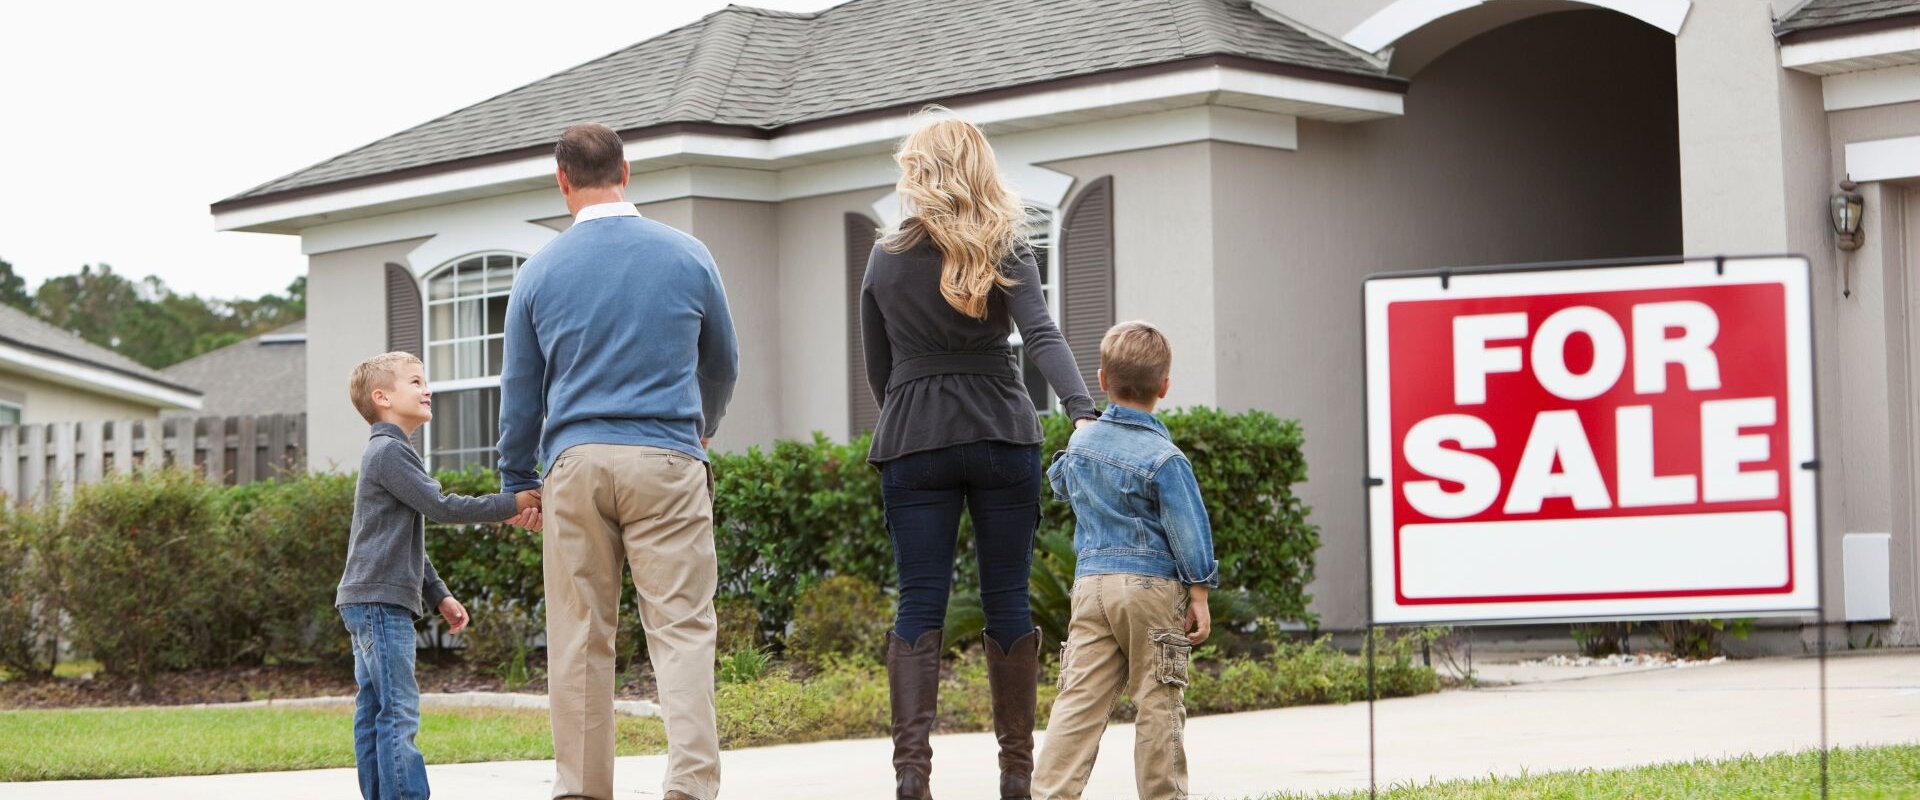 A family walking towards a house